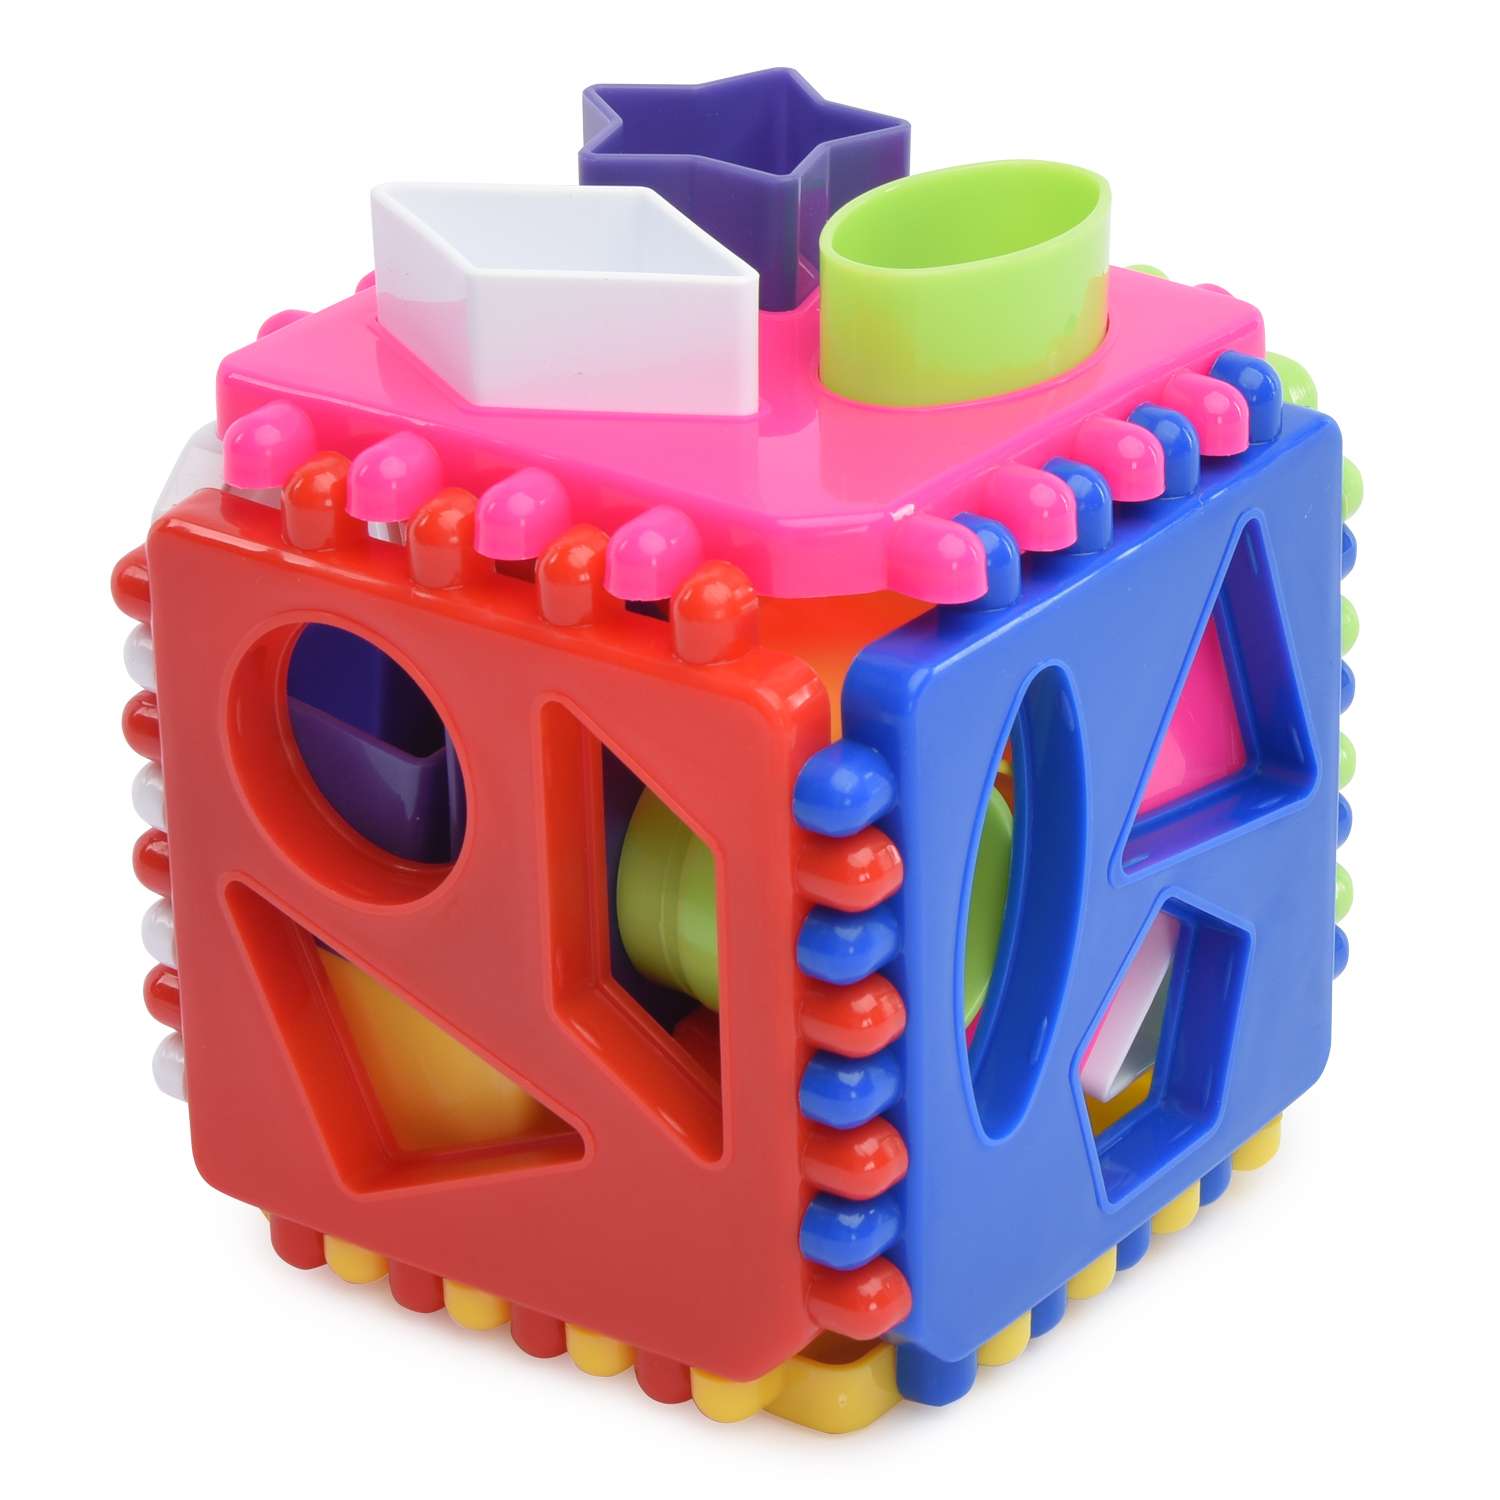 Cube детские. Куб Стеллар логический. Сортер логический куб Стеллар 01307. Сортер Stellar куб малый, 9 см. Сортер домик Стеллар.